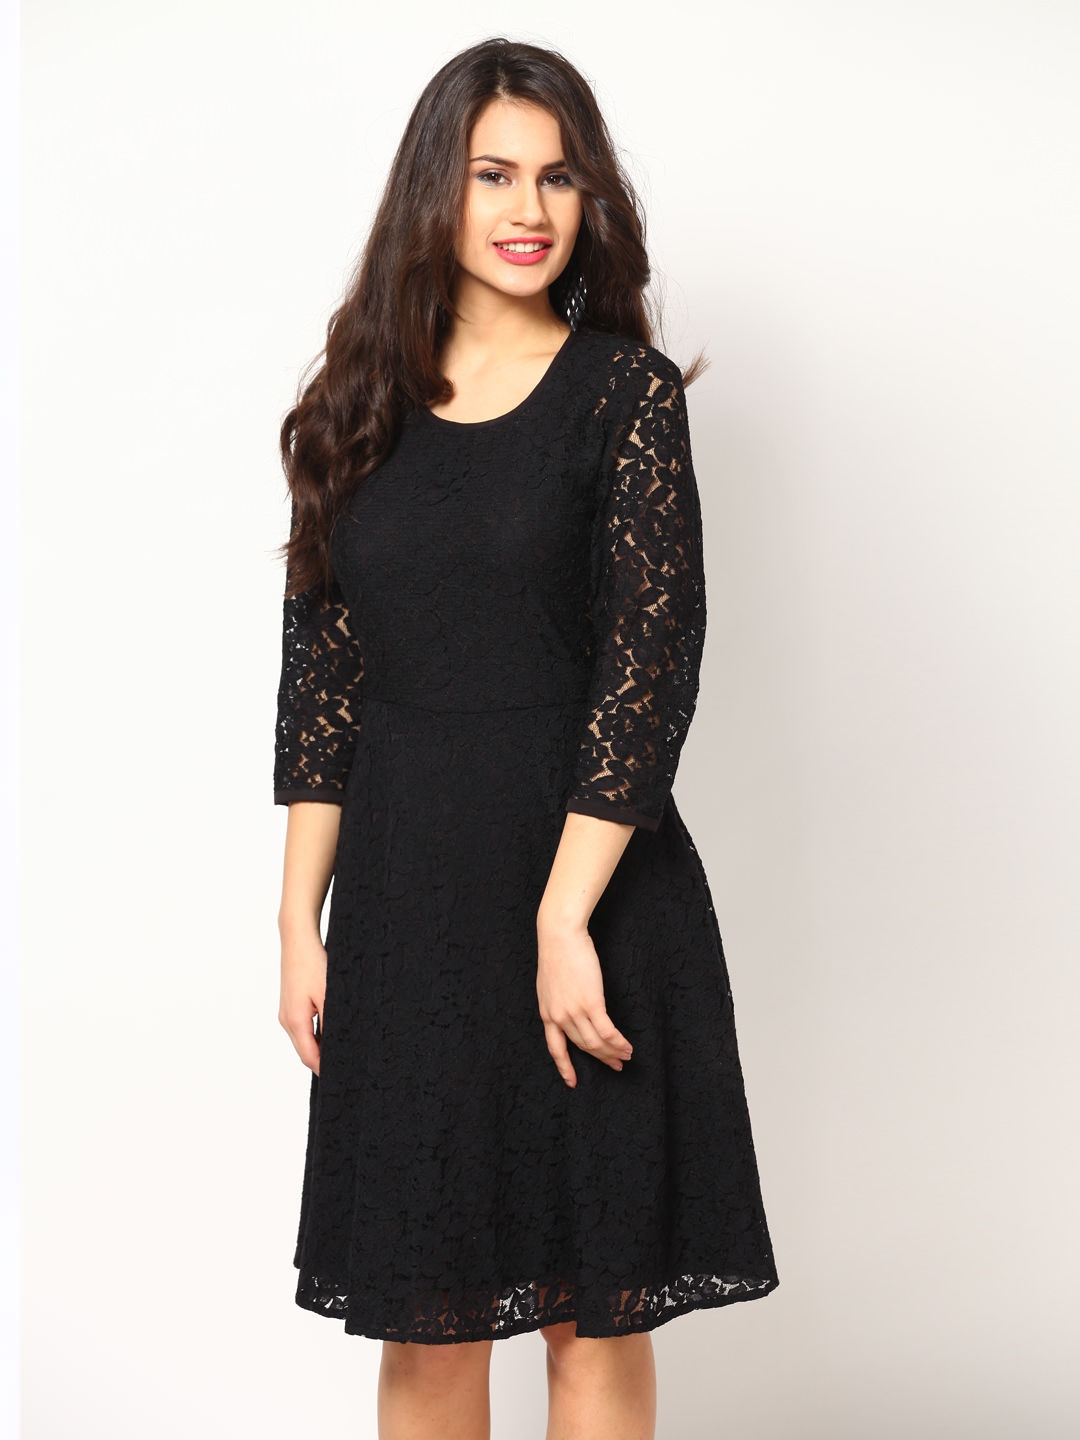 Buy Eavan Black Lace Fit & Flare Dress Dresses for Women